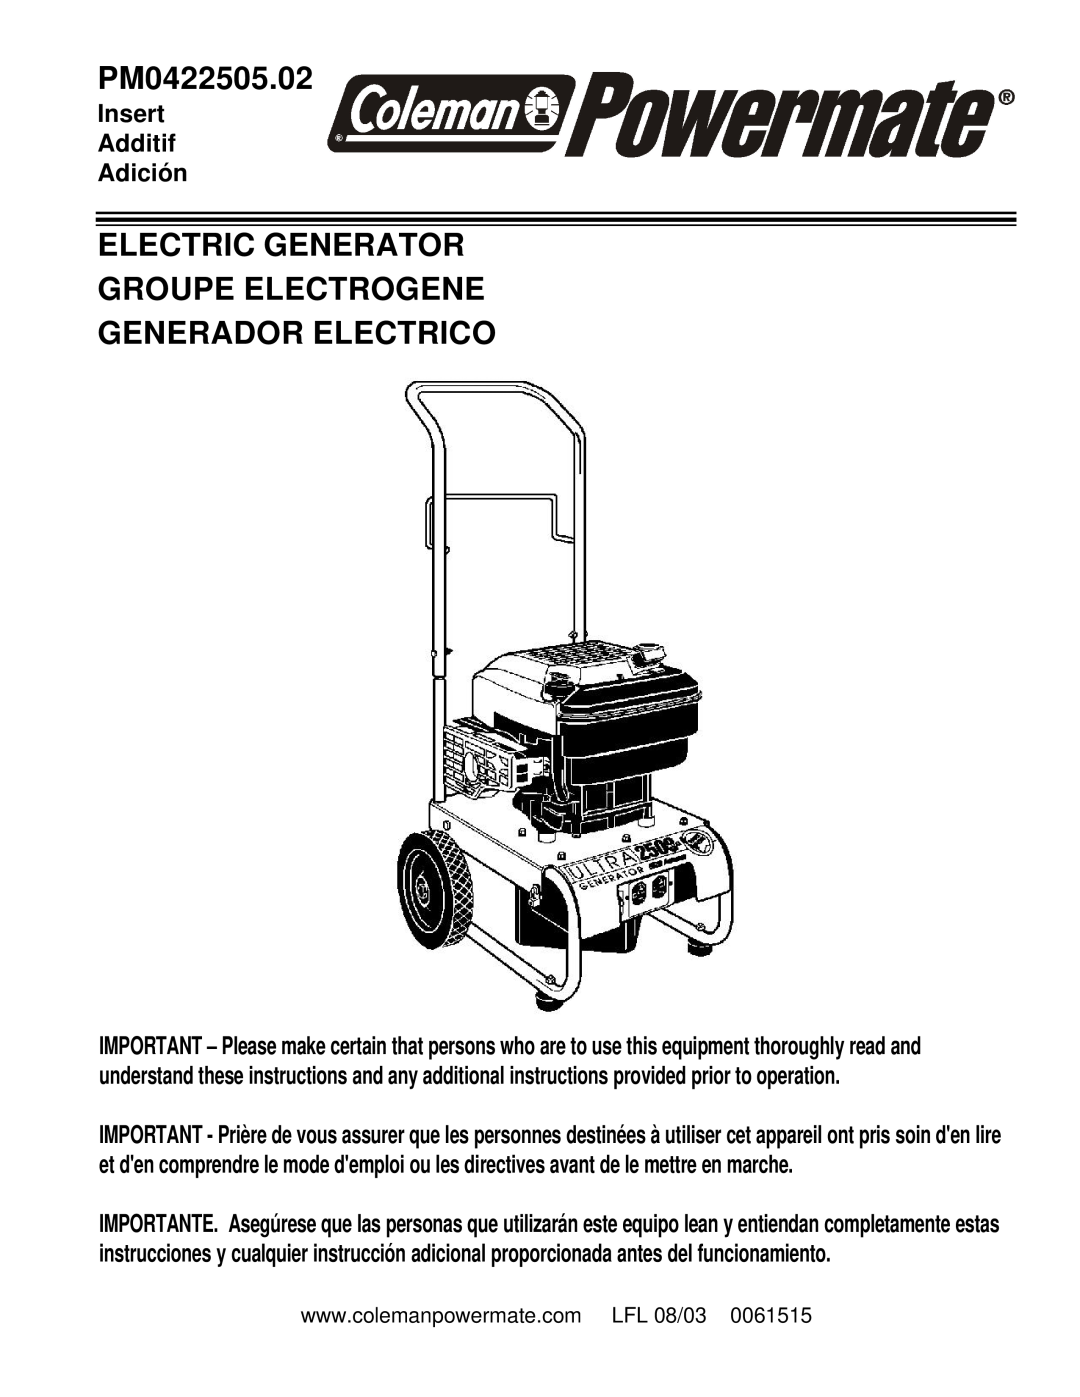 Powermate PM0422505.02 manual Electric Generator Groupe Electrogene, Generador Electrico, Insert Additif Adición 